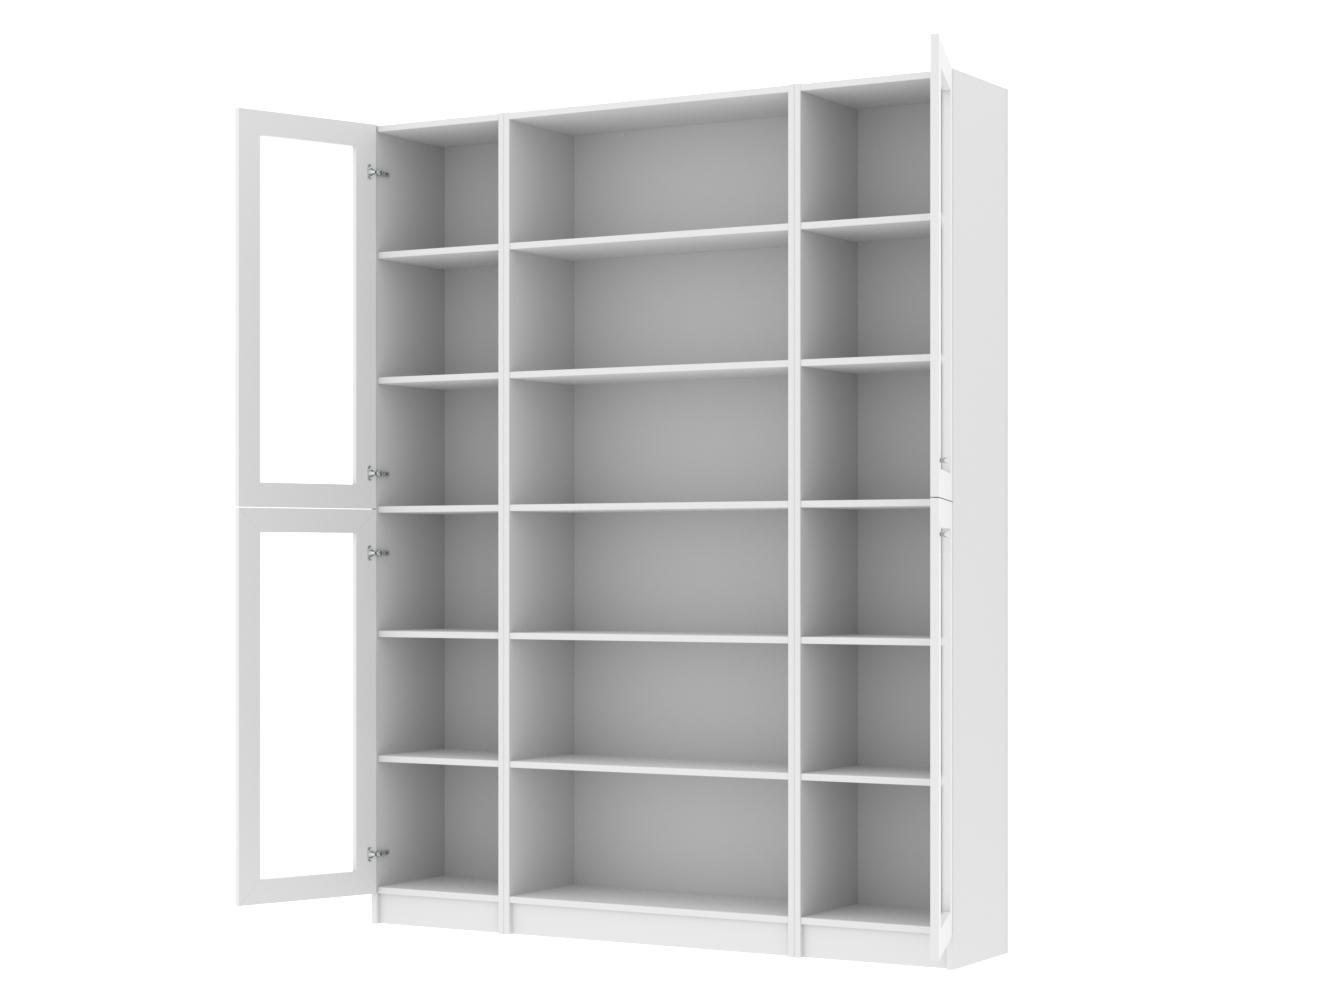  Книжный шкаф Билли 422 white ИКЕА (IKEA) изображение товара